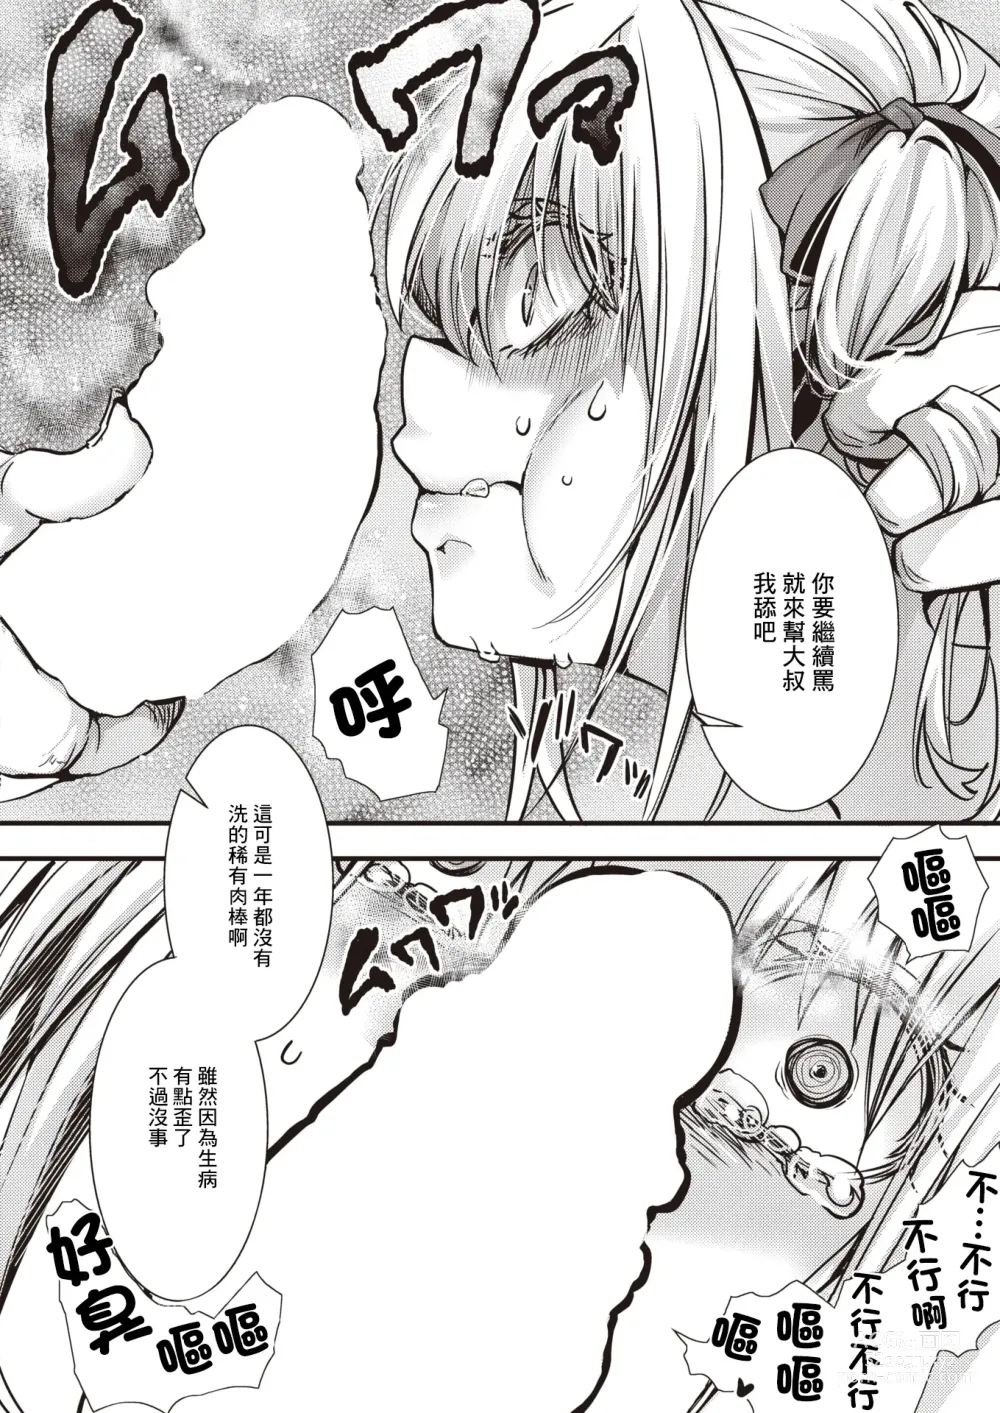 Page 6 of manga Itadaki Joou Mimi-chan vs Kouen Sumi Oji Rengou